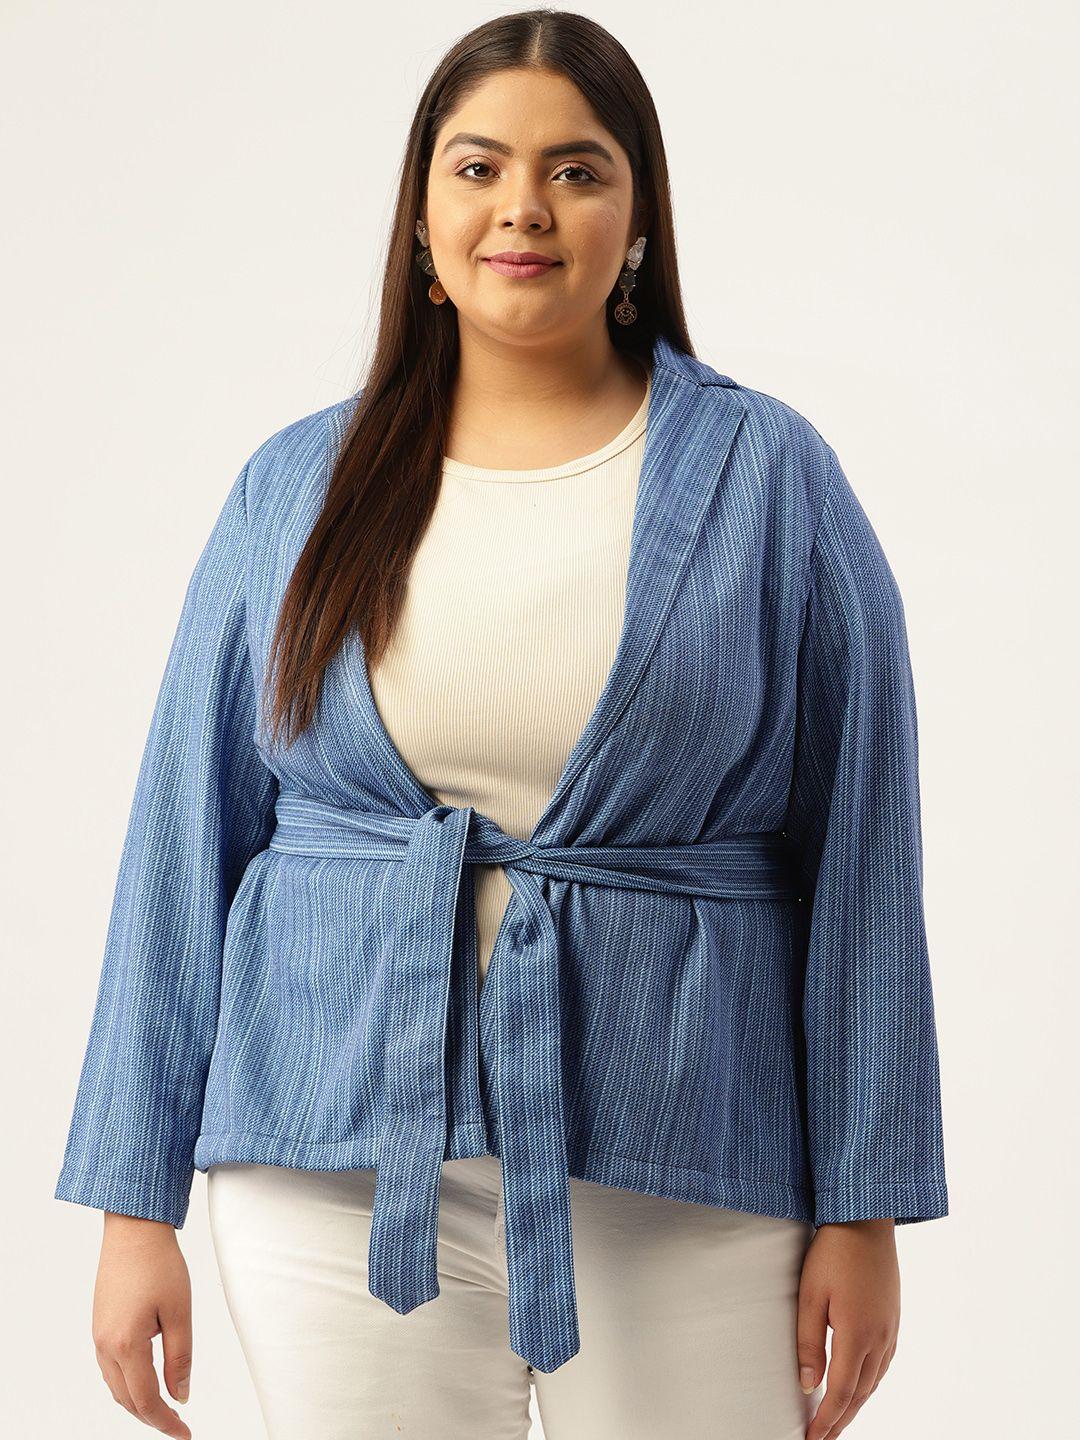 amydus women plus size blue striped tailored jacket